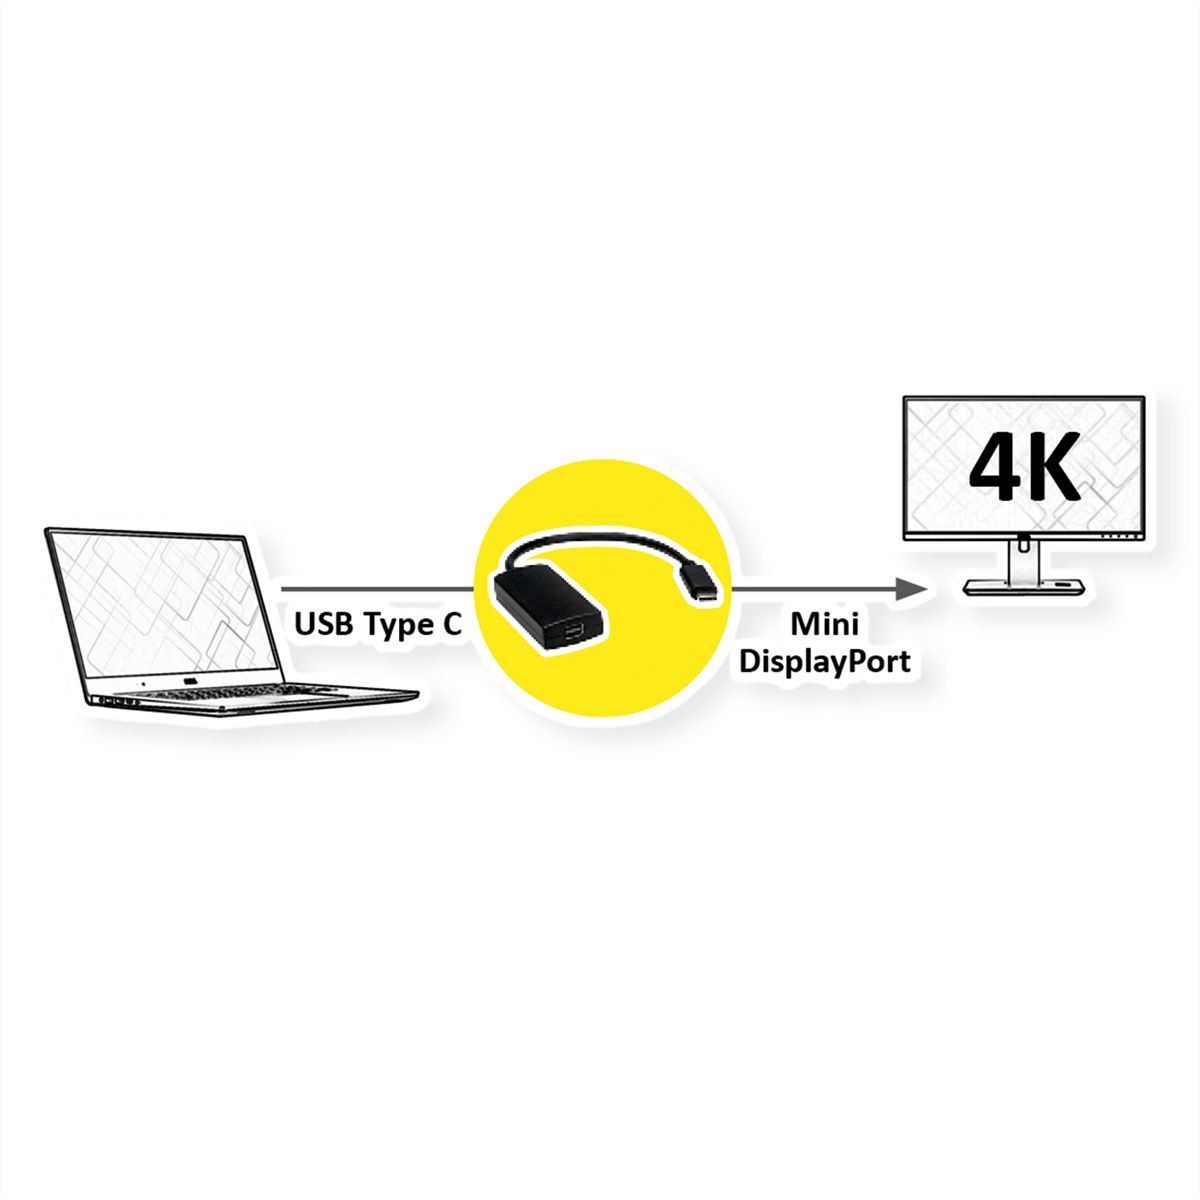 HF-UCTMDPF-A: USB 3.1 Type C to Mini DisplayPort (1.2) Female 4K@60Hz Adapter - DP 1.2 Alt Mode